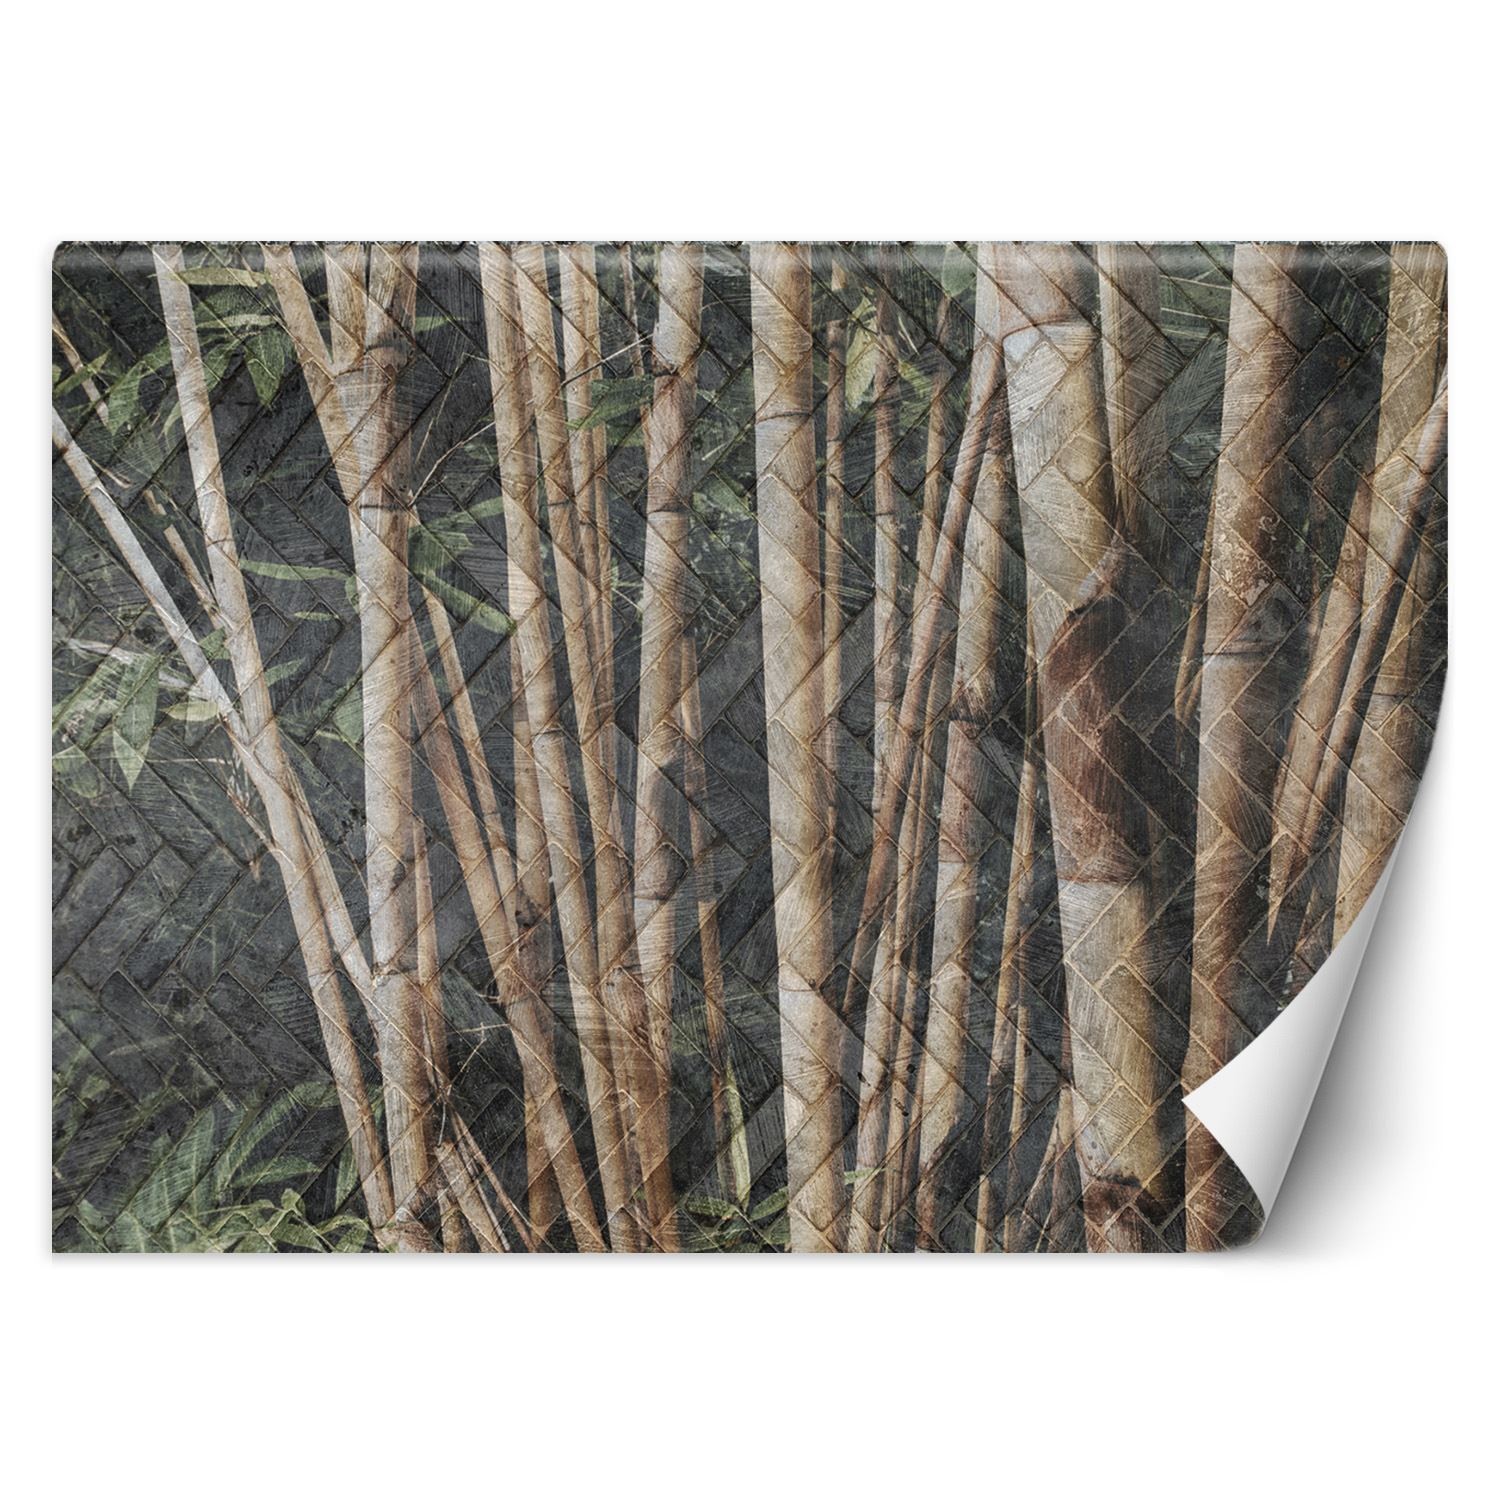 Trend24 – Behang – Bamboo Forest – Vliesbehang – Behang Woonkamer – Fotobehang – 350×245 cm – Incl. behanglijm